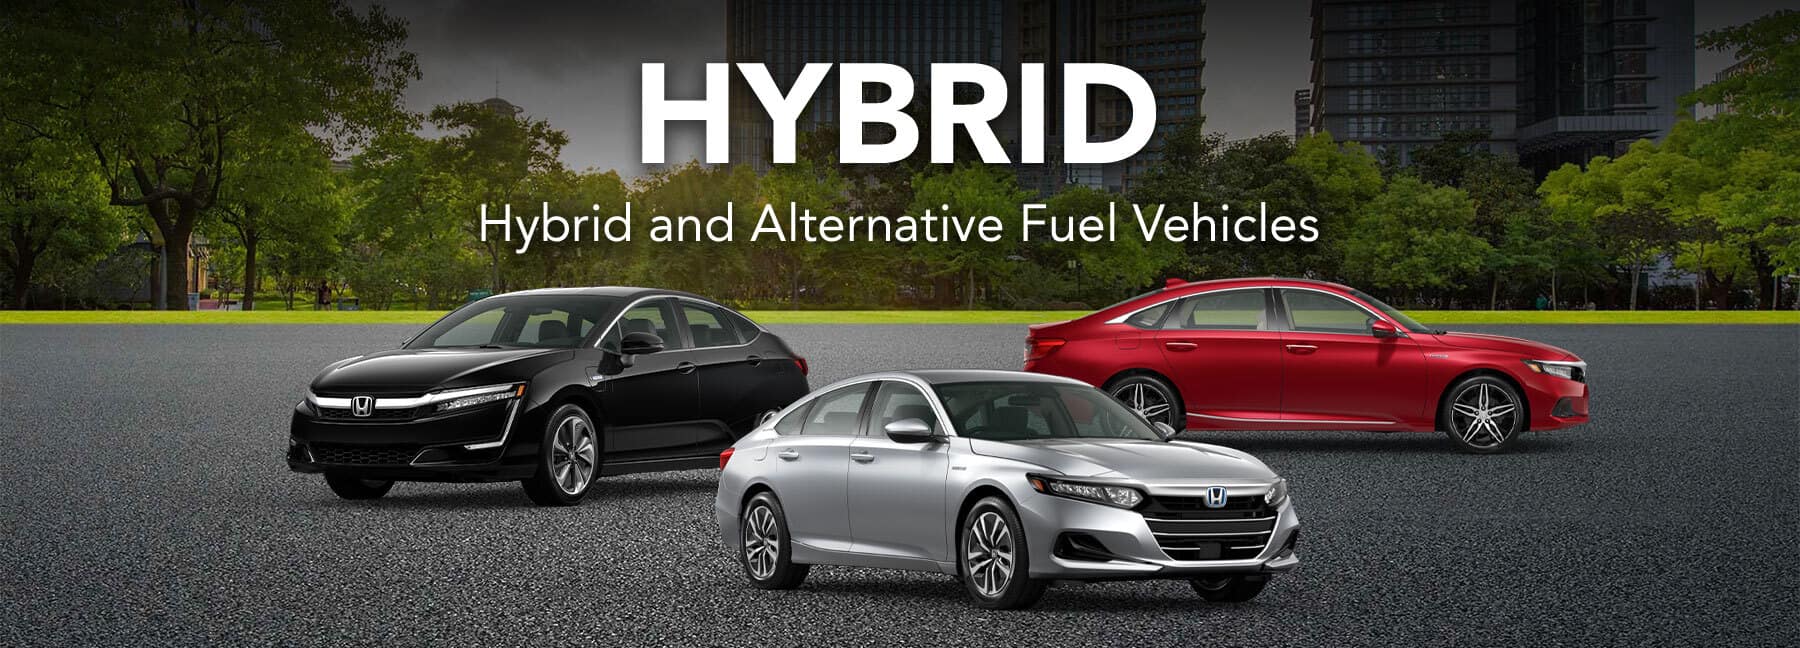 Honda Hybrids Cars in Missouri 